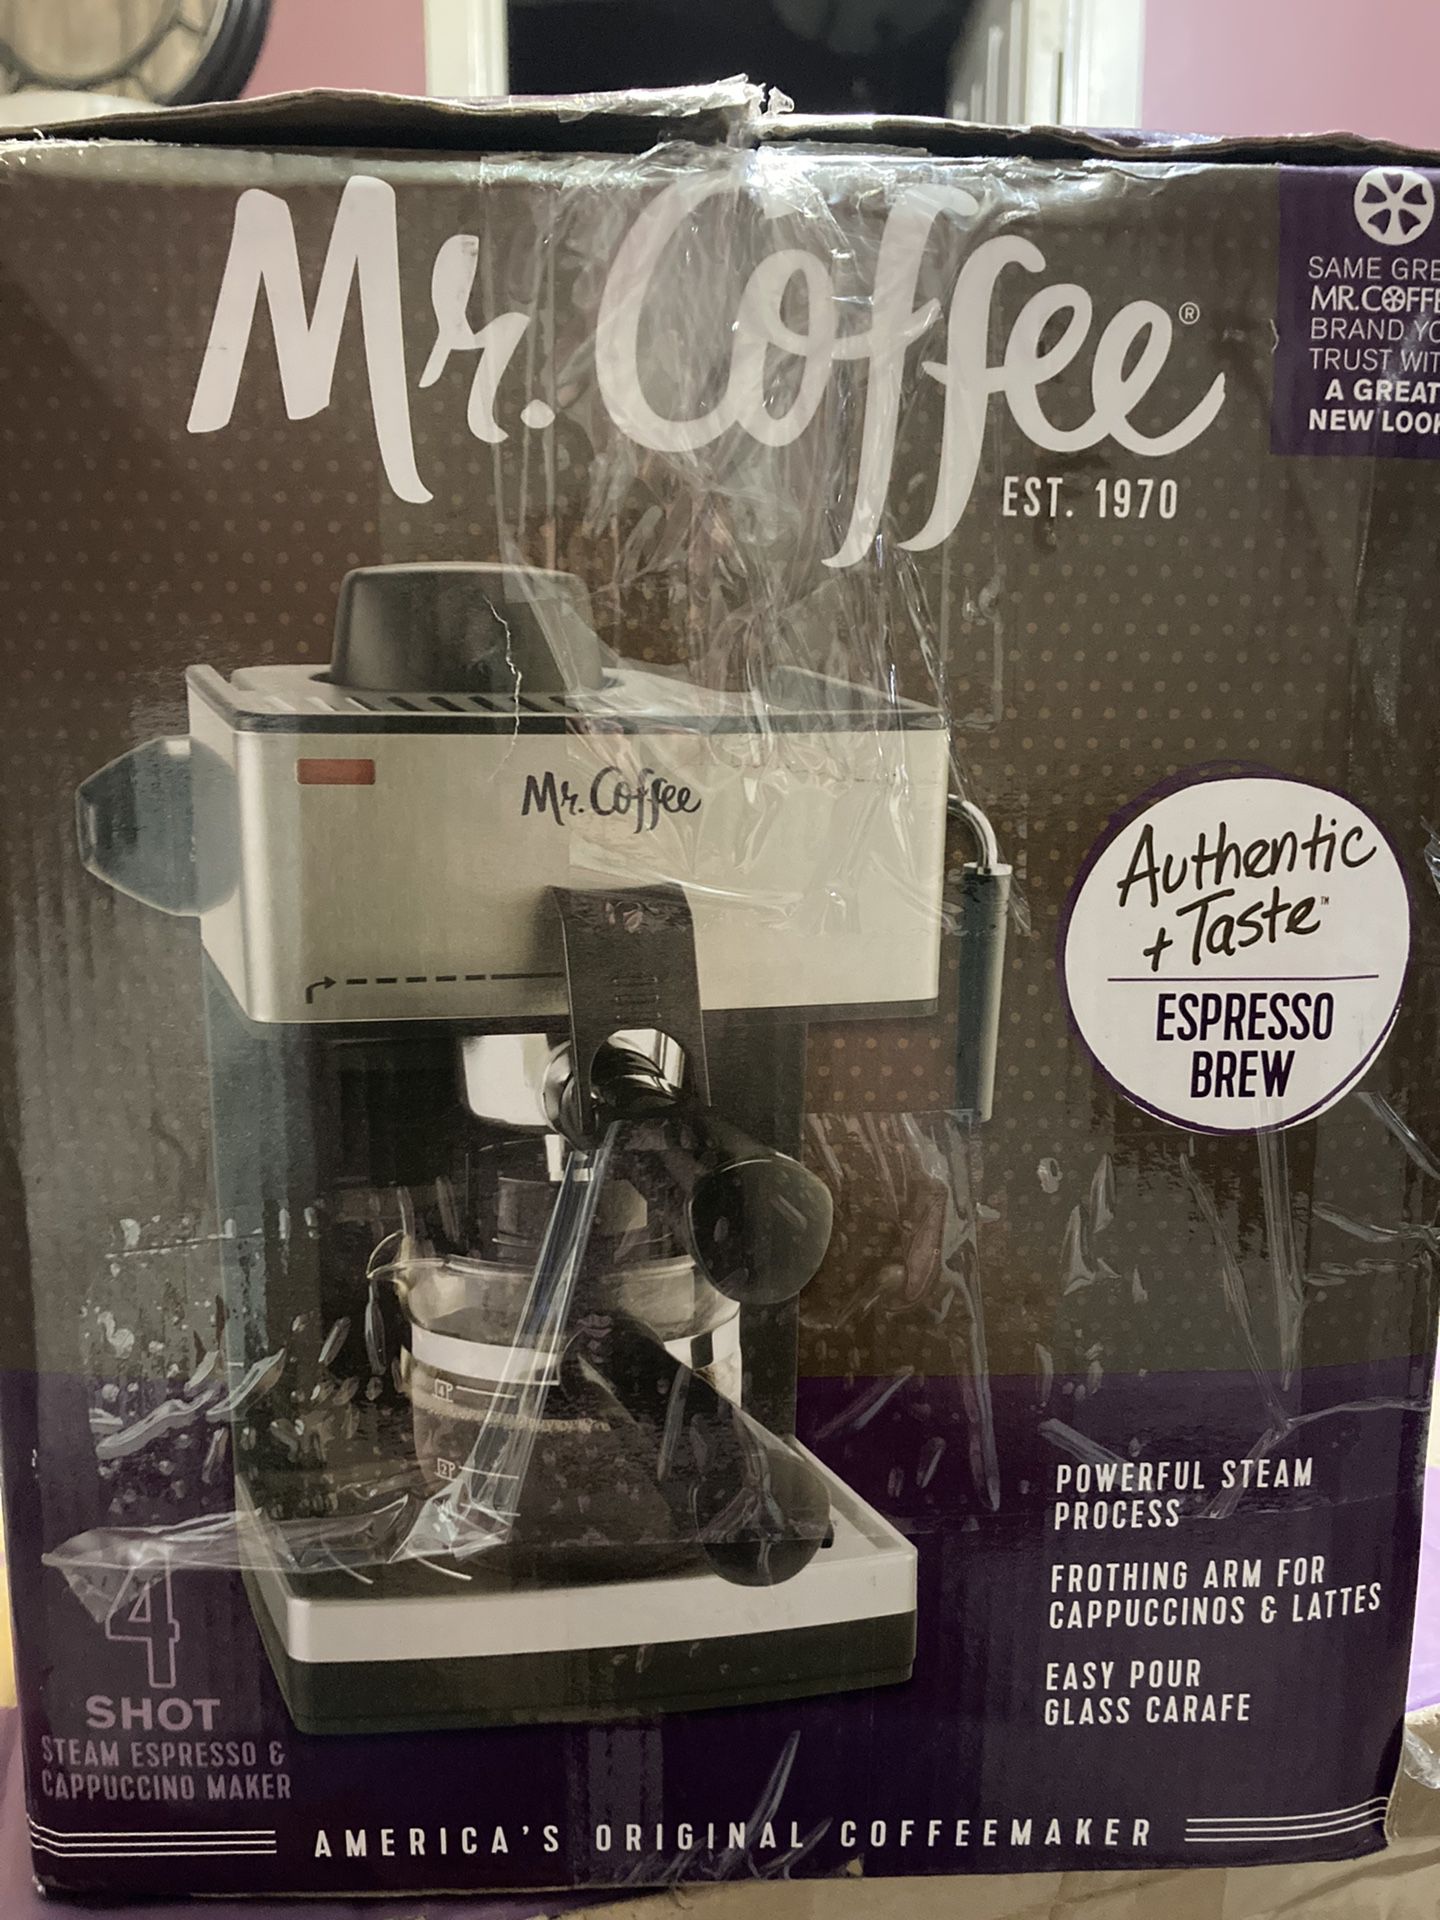 Mr. coffee espresso maker for Sale in Homewood, IL - OfferUp